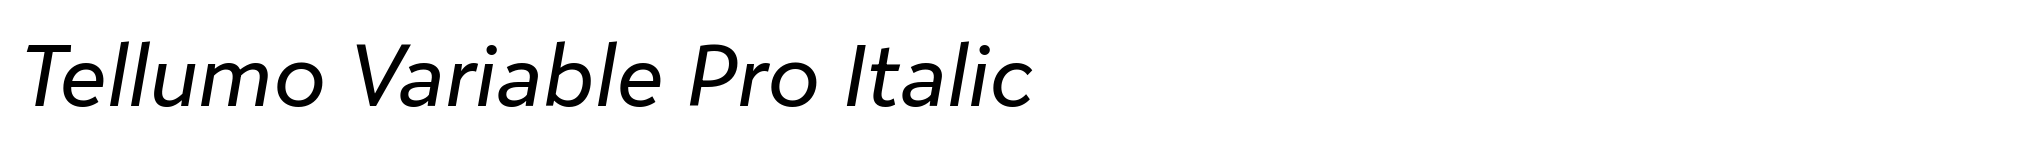 Tellumo Variable Pro Italic image